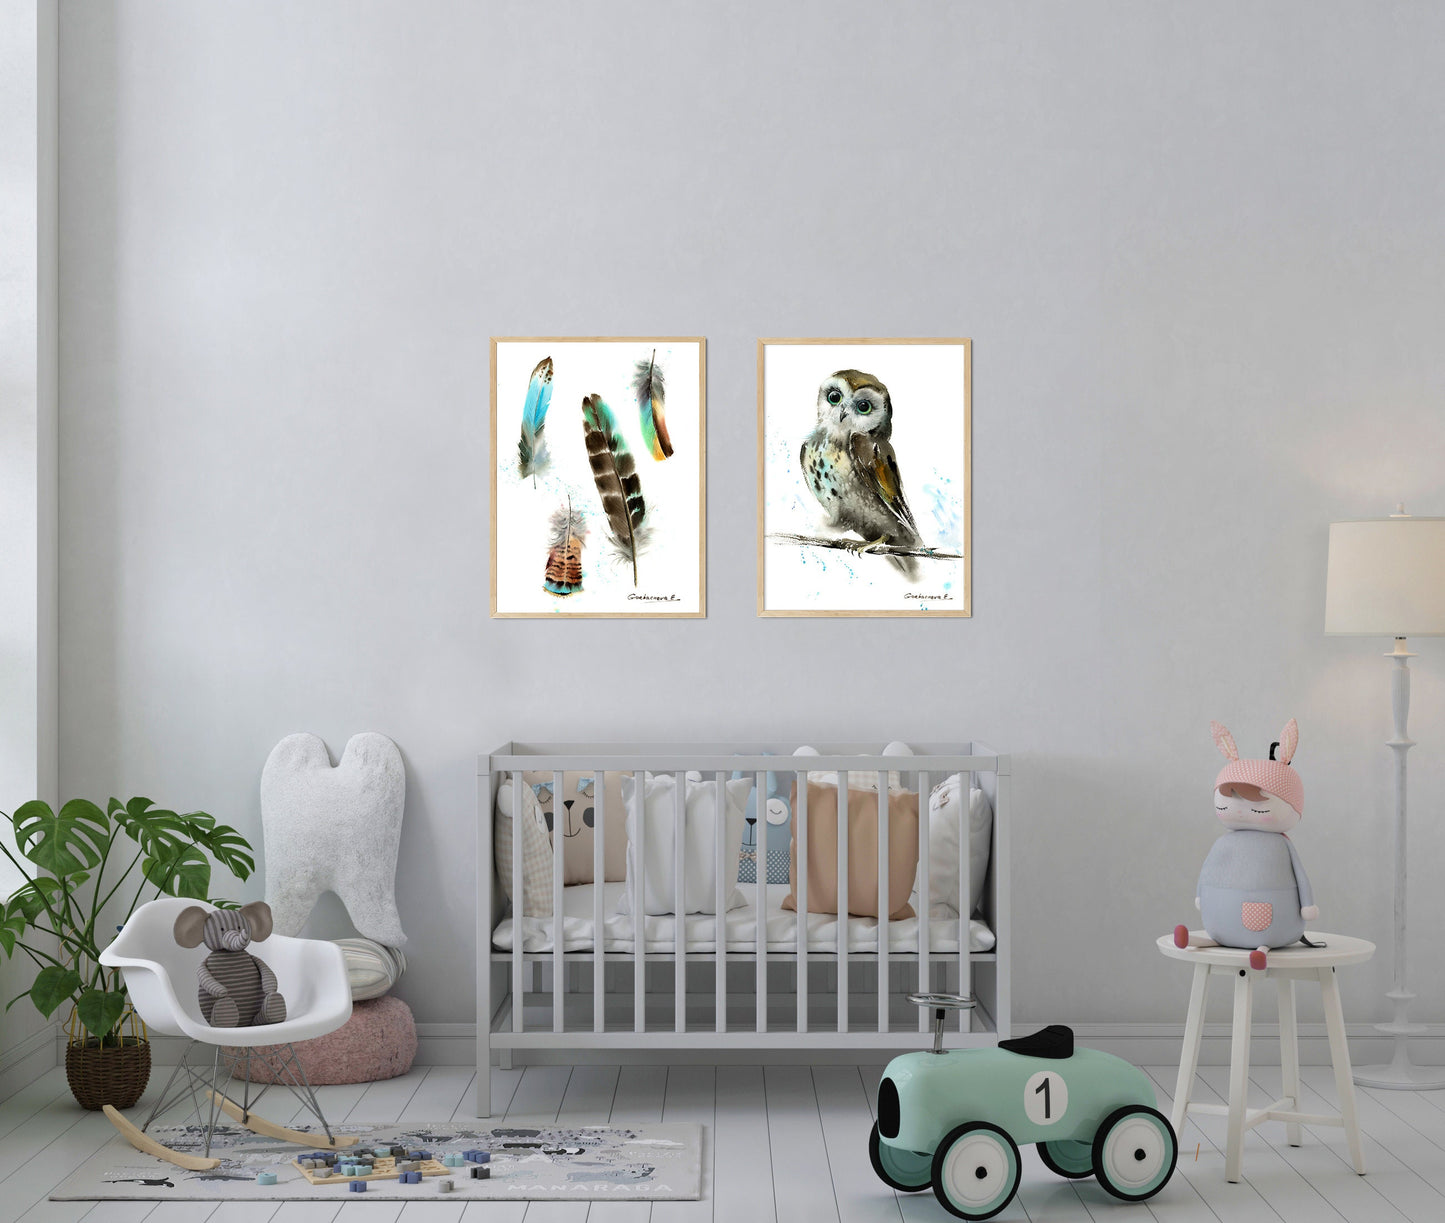 Set of 2 Owl, Watercolor Prints, Gray Bird Wall Art, Minimalist Bird, Animal Kids Room Decor, Canvas Print